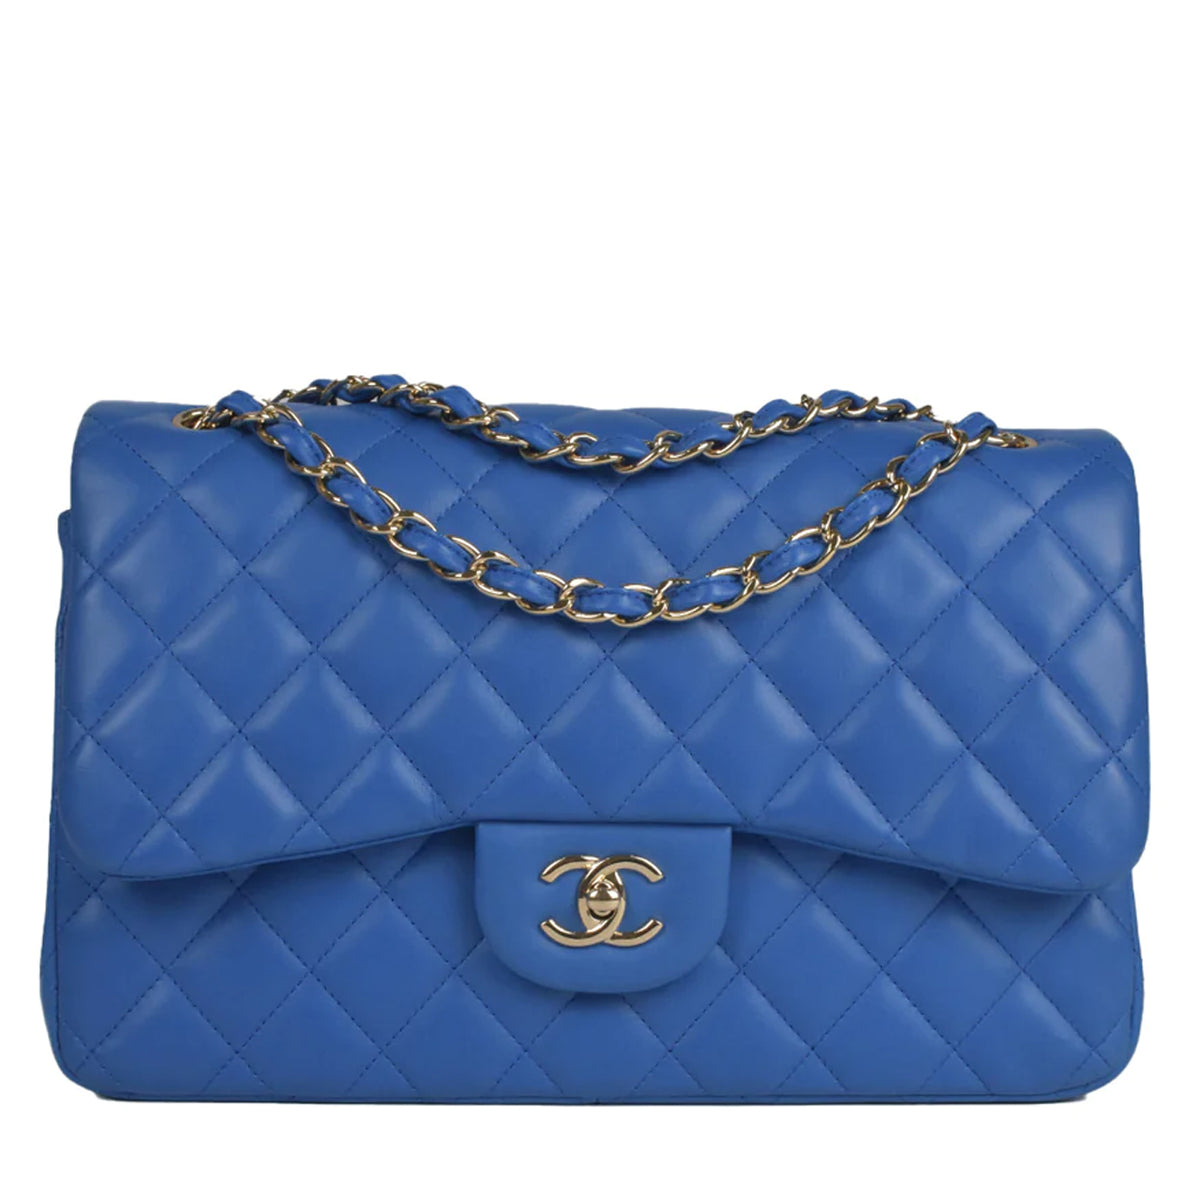 buy Chanel bag online Australia : @newseo newseo seo wish